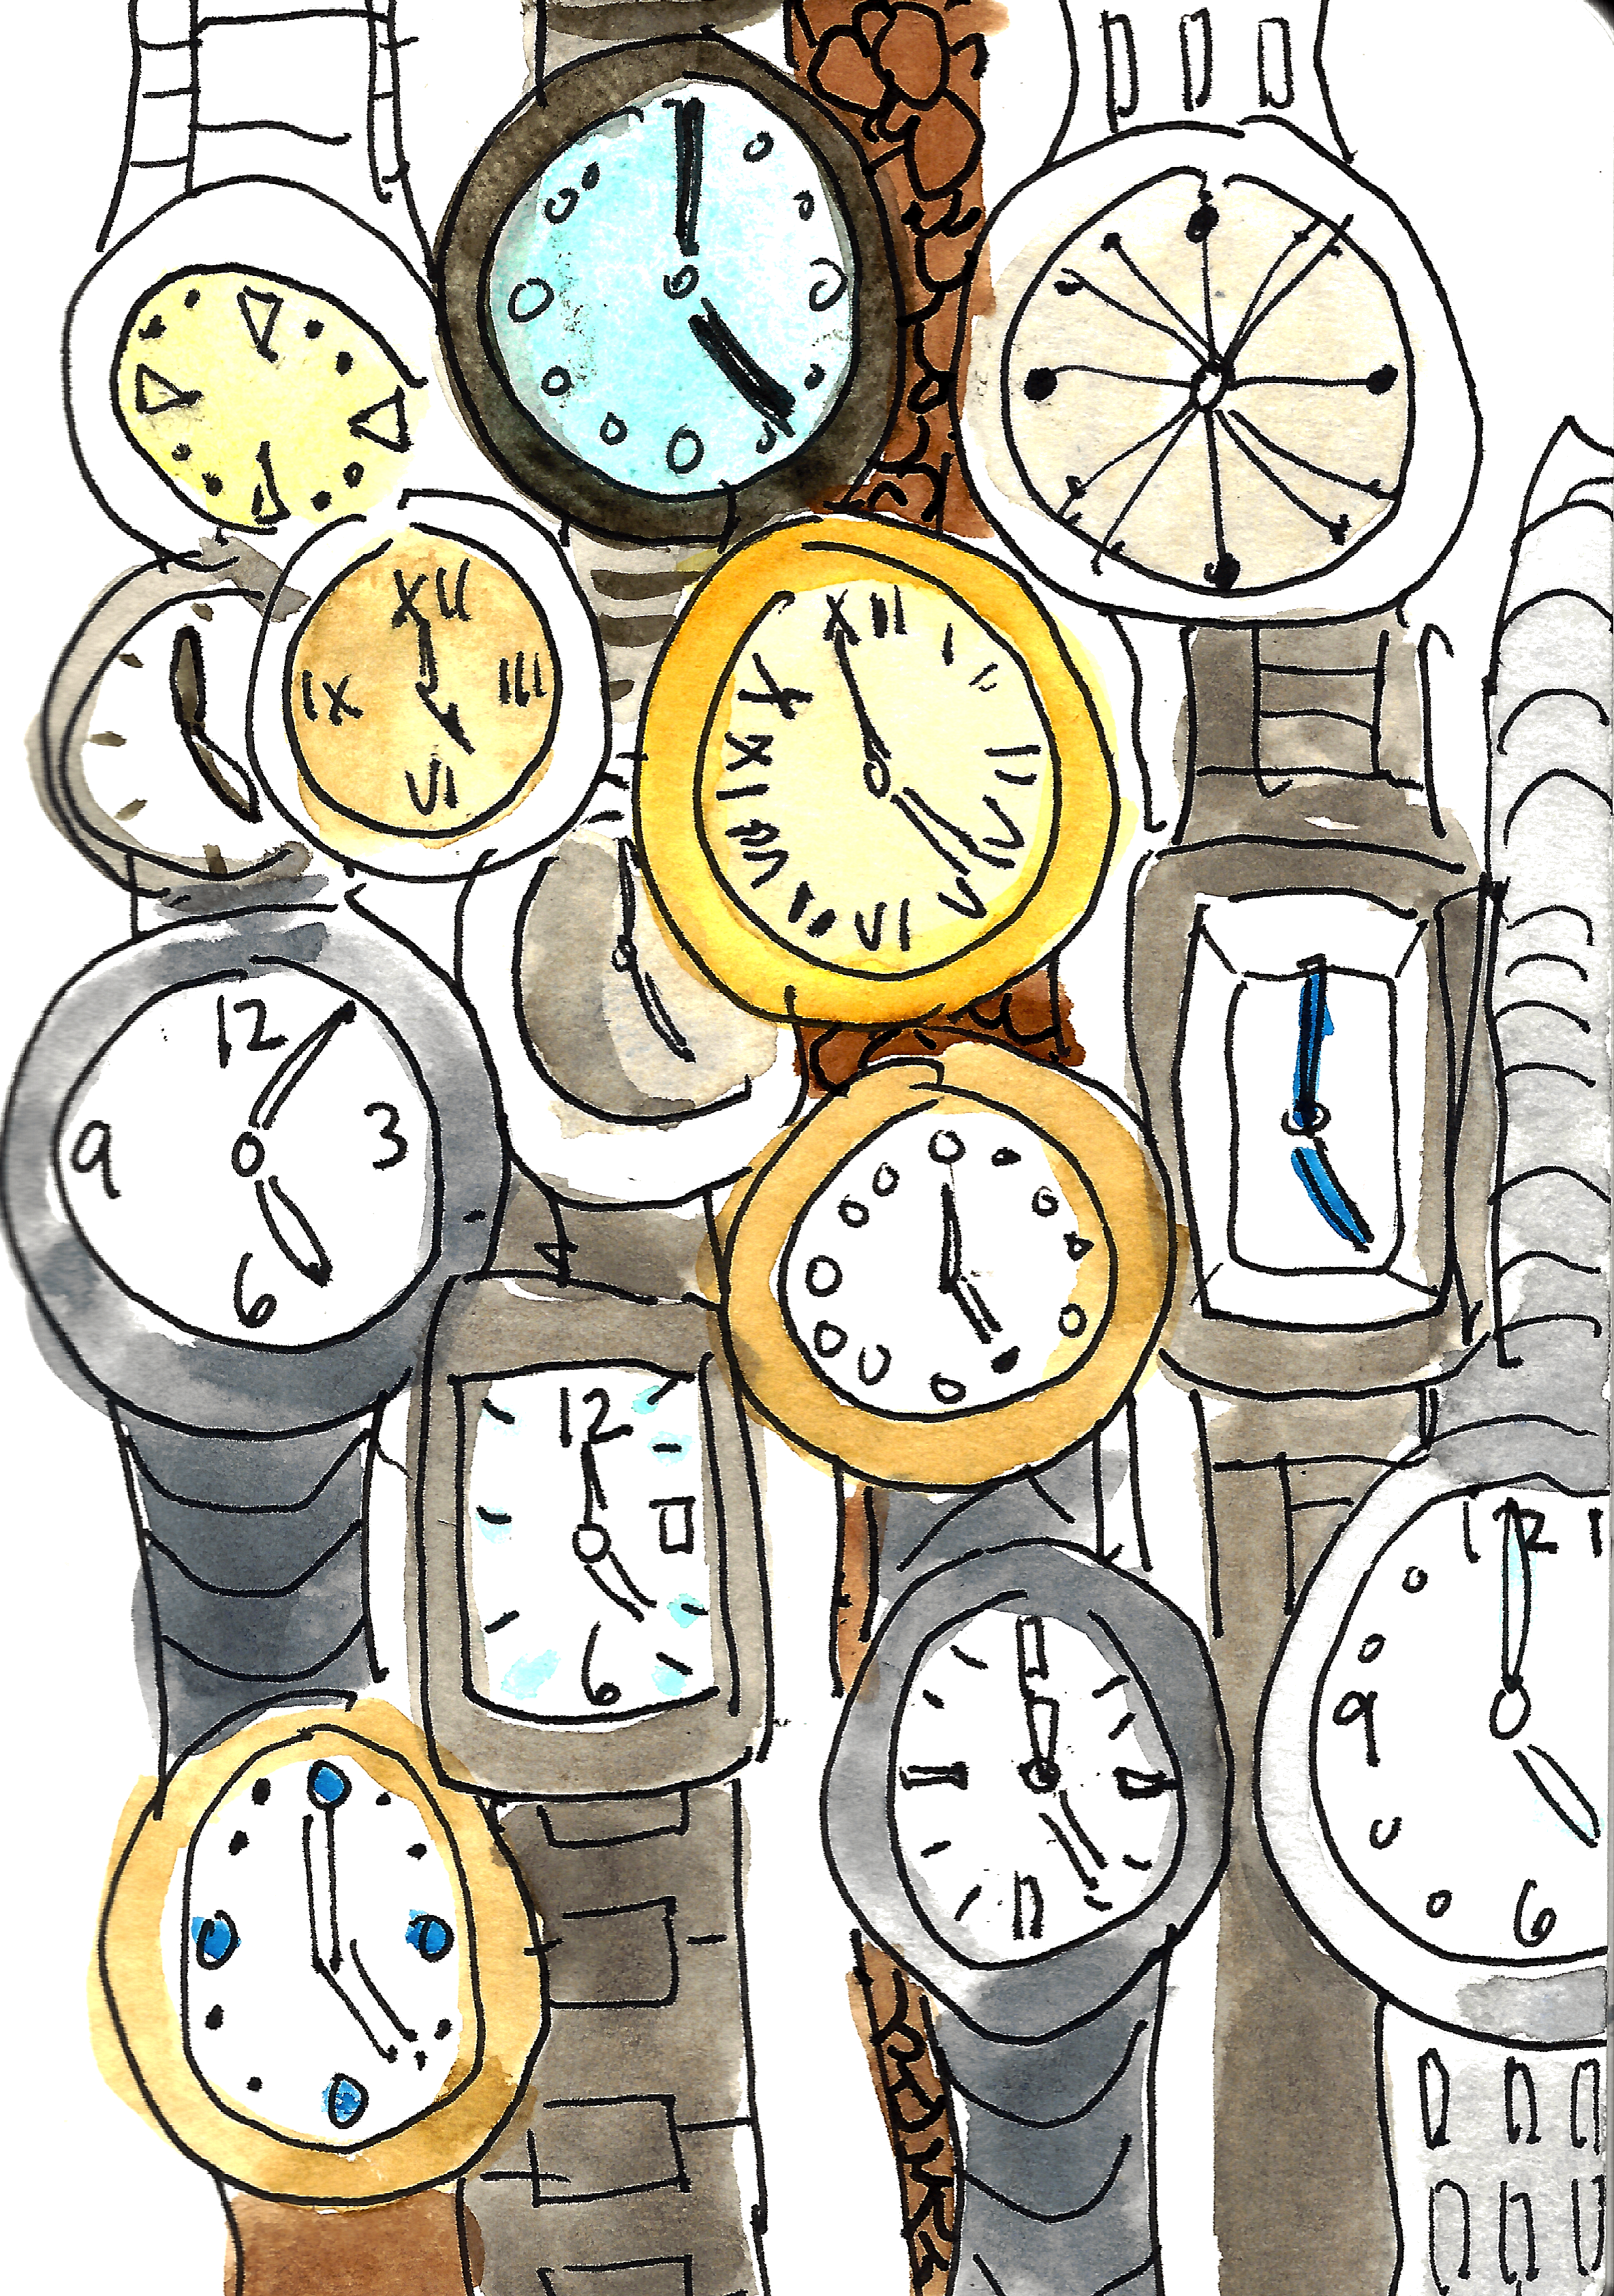 Watches on display, illustration by Alison Garwood-Jones